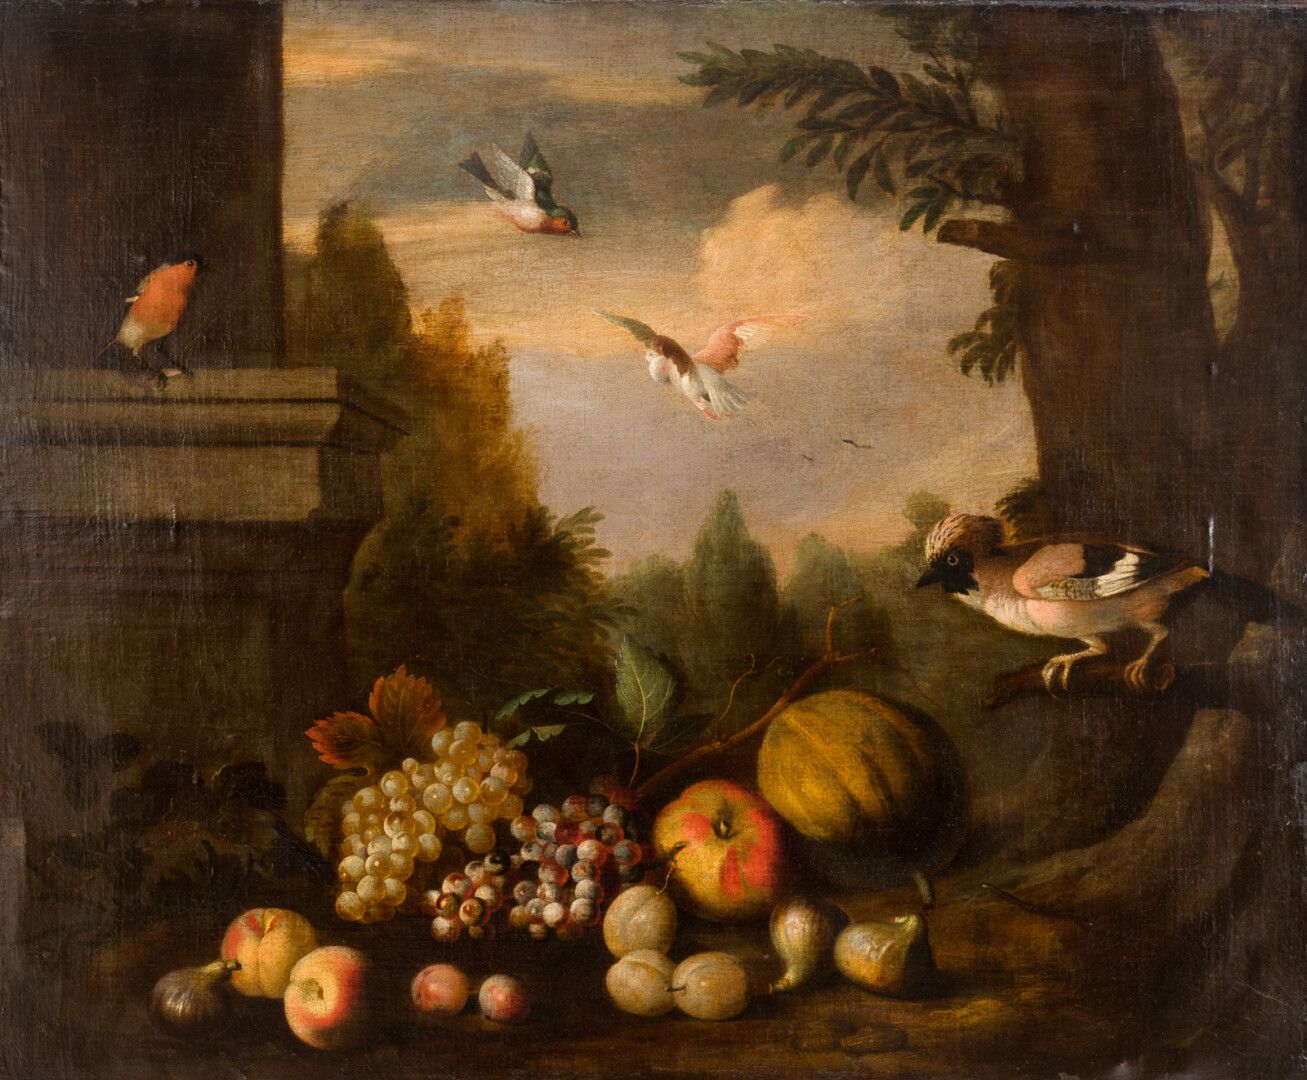 Null Atribuido a Tobias STRANOVER (1684 - 1756)

Bodegón con pájaros

Óleo sobre&hellip;